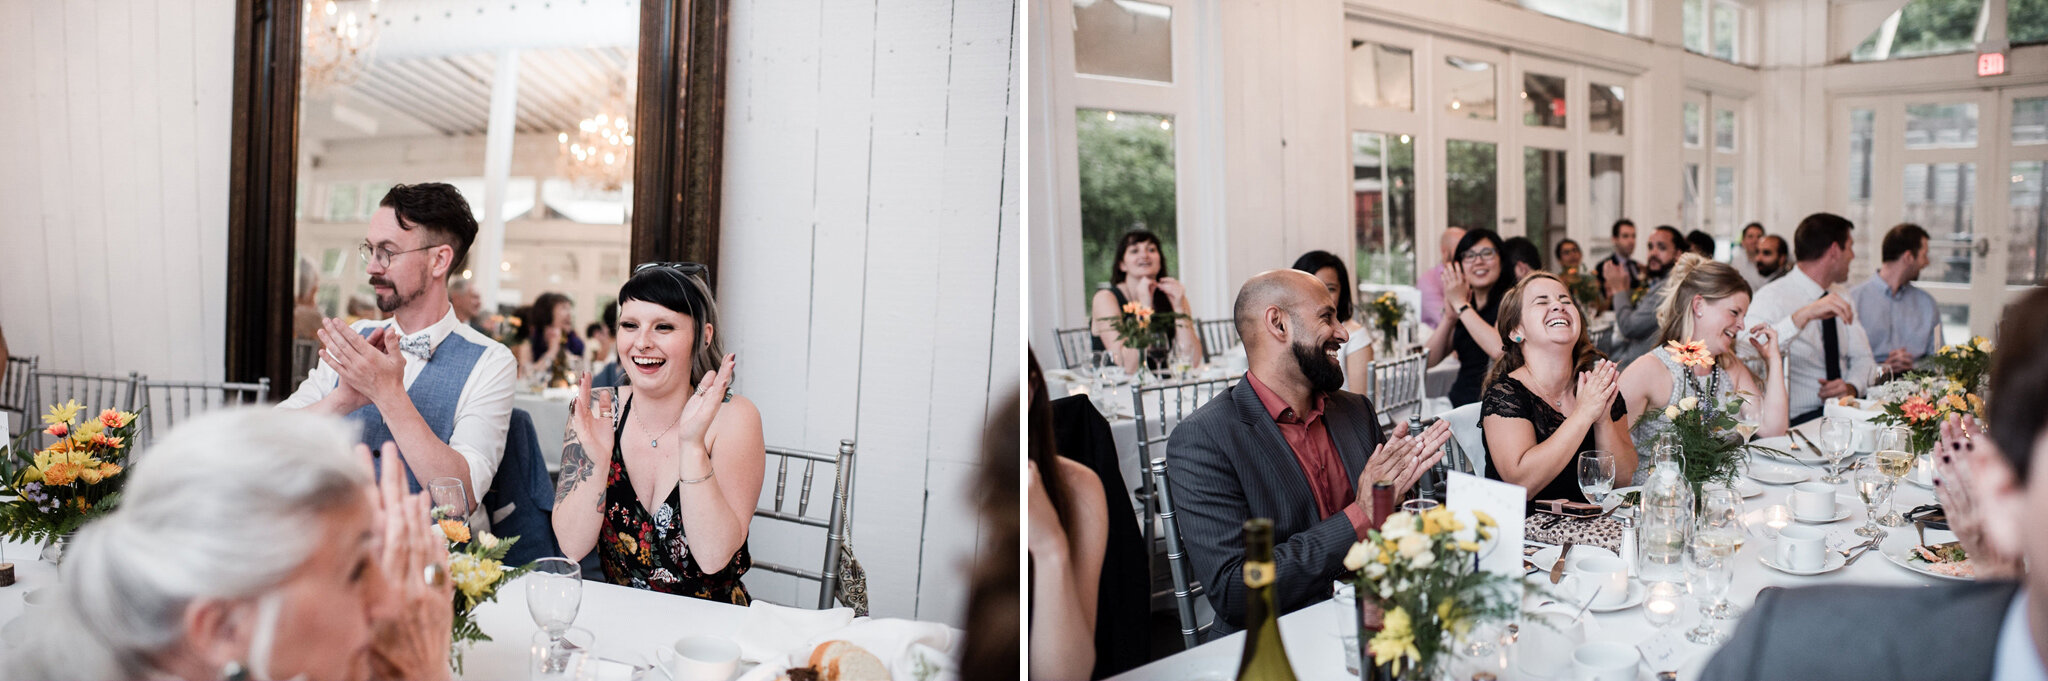 791-minimal-reception-wedding-dinner-photos-berkeley-fieldhouse-events.jpg